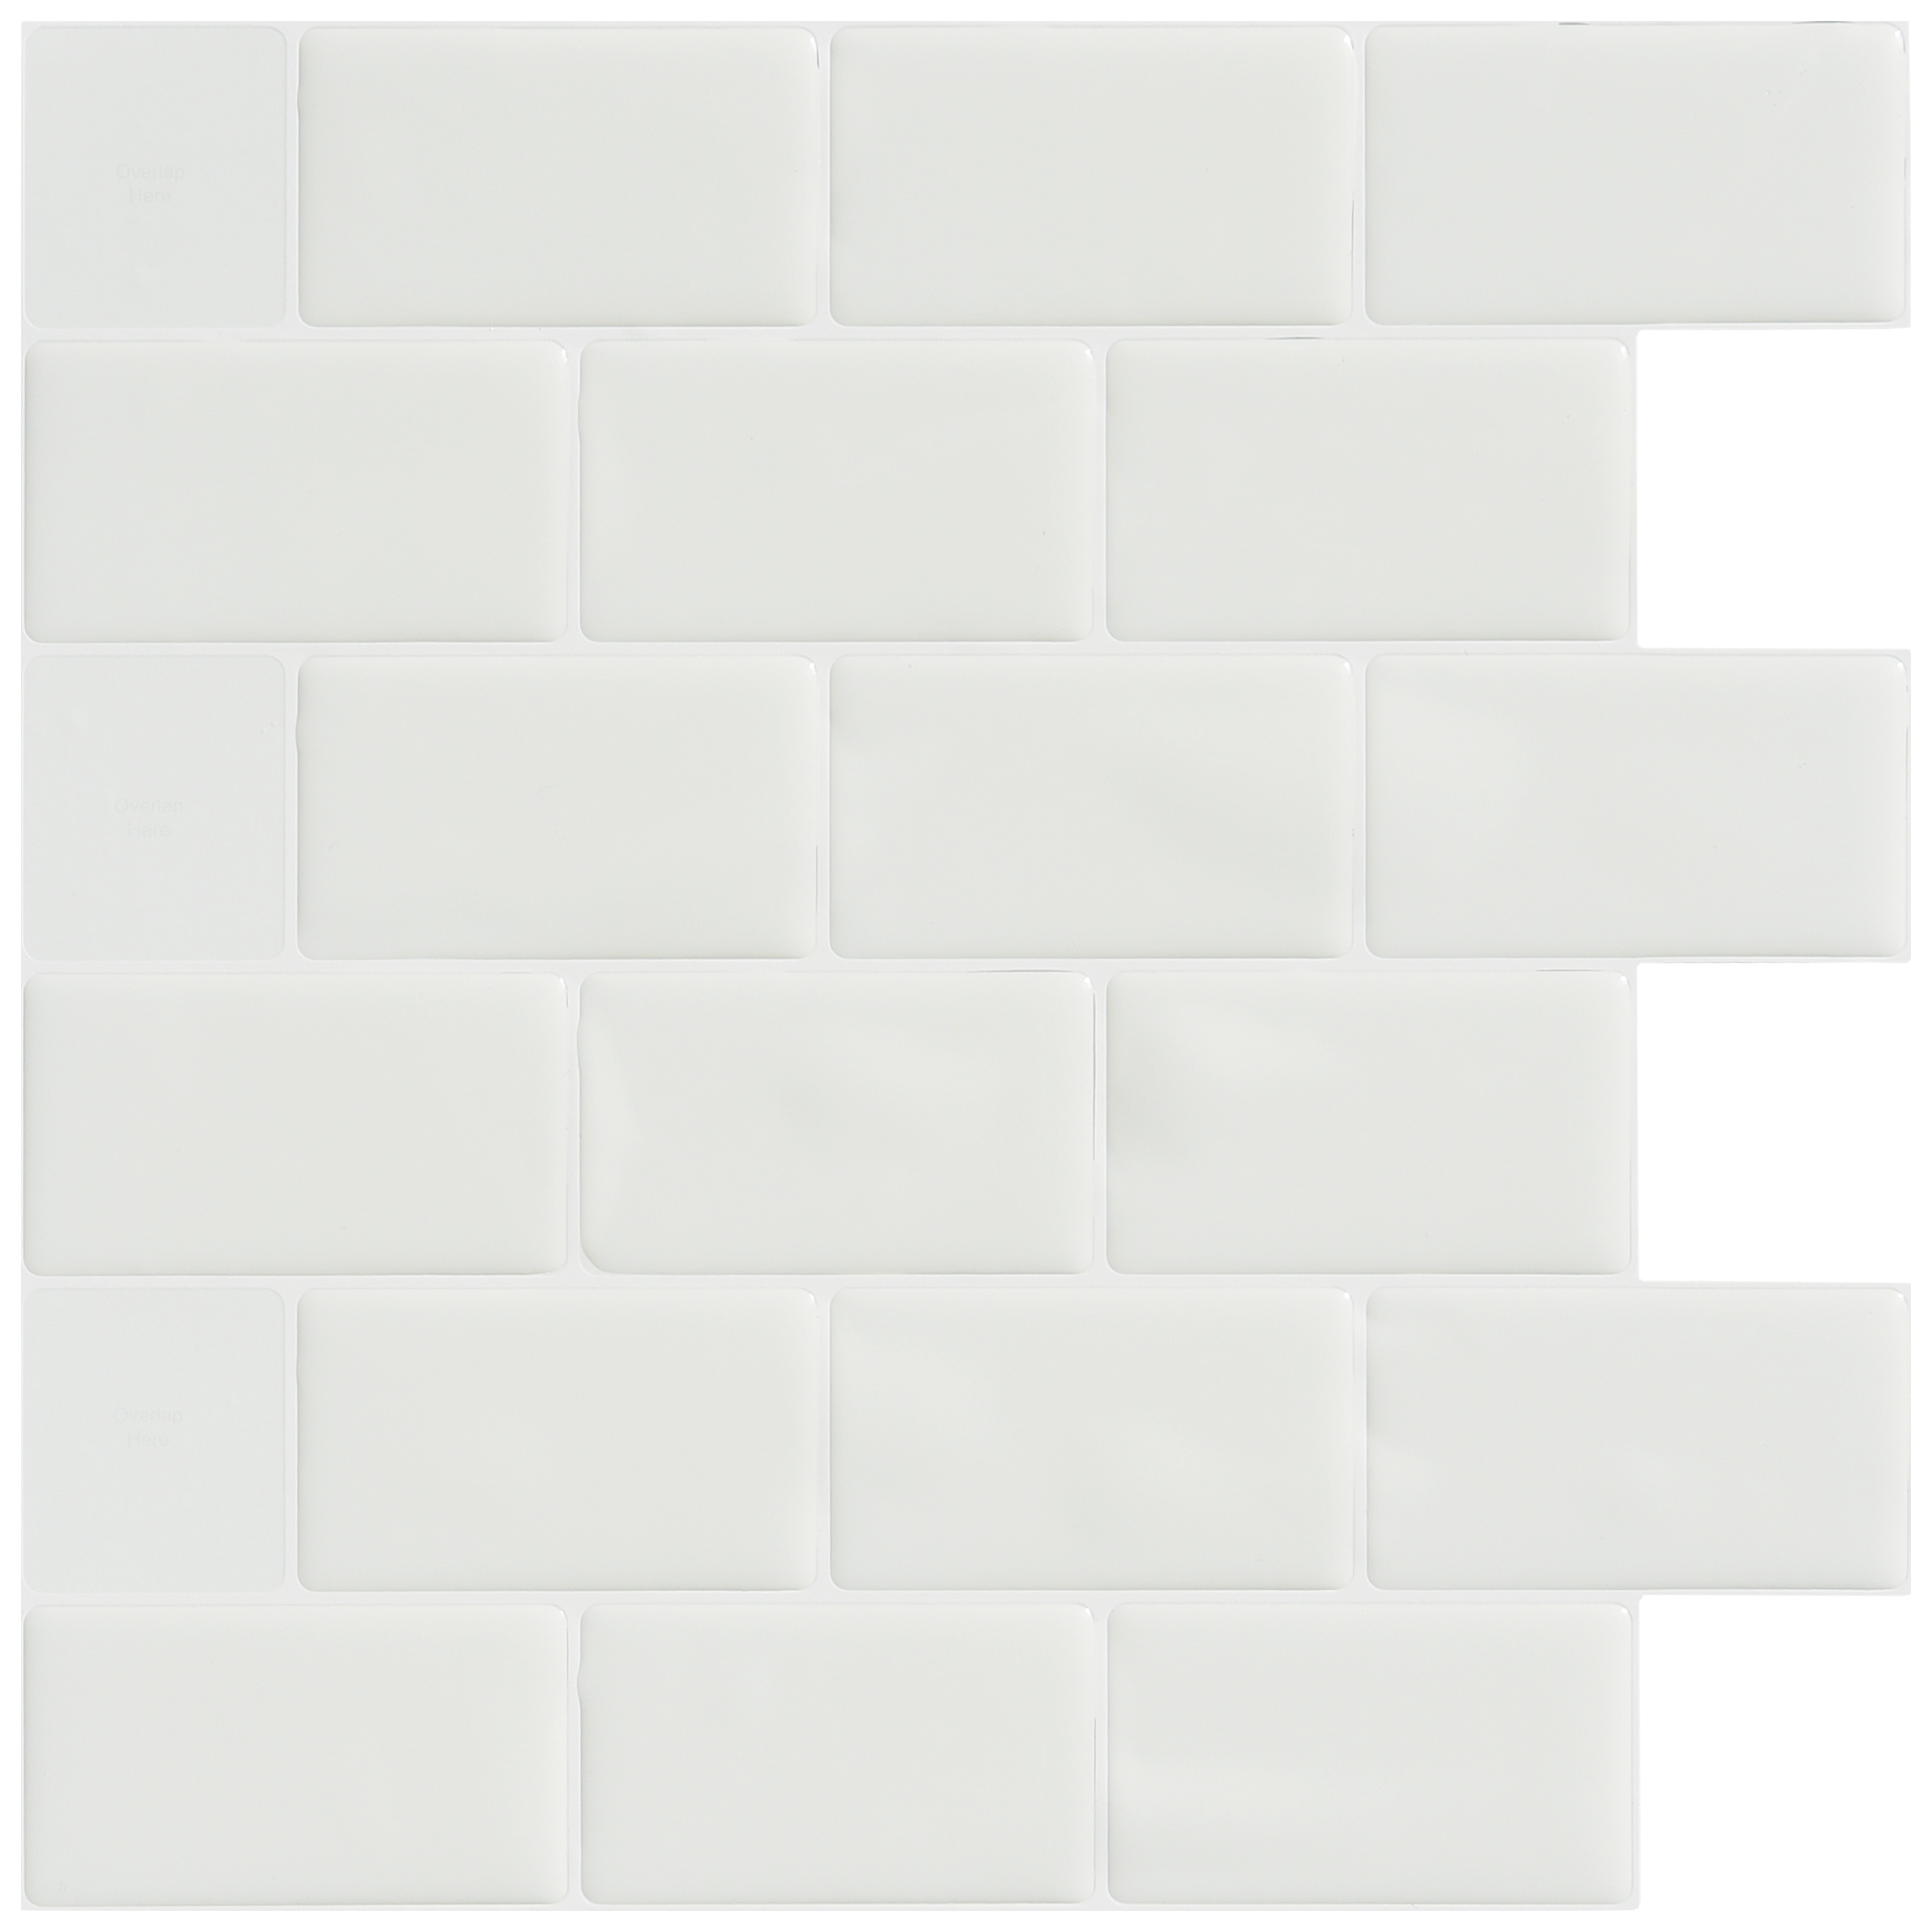 Art3d Self Adhesive 3D Wall Tiles Kitchen Backsplash, Bathroom & Laundry  Room Decor, Peel & Stick Wallpaper 10 Pack From Art3dusa, $31.84